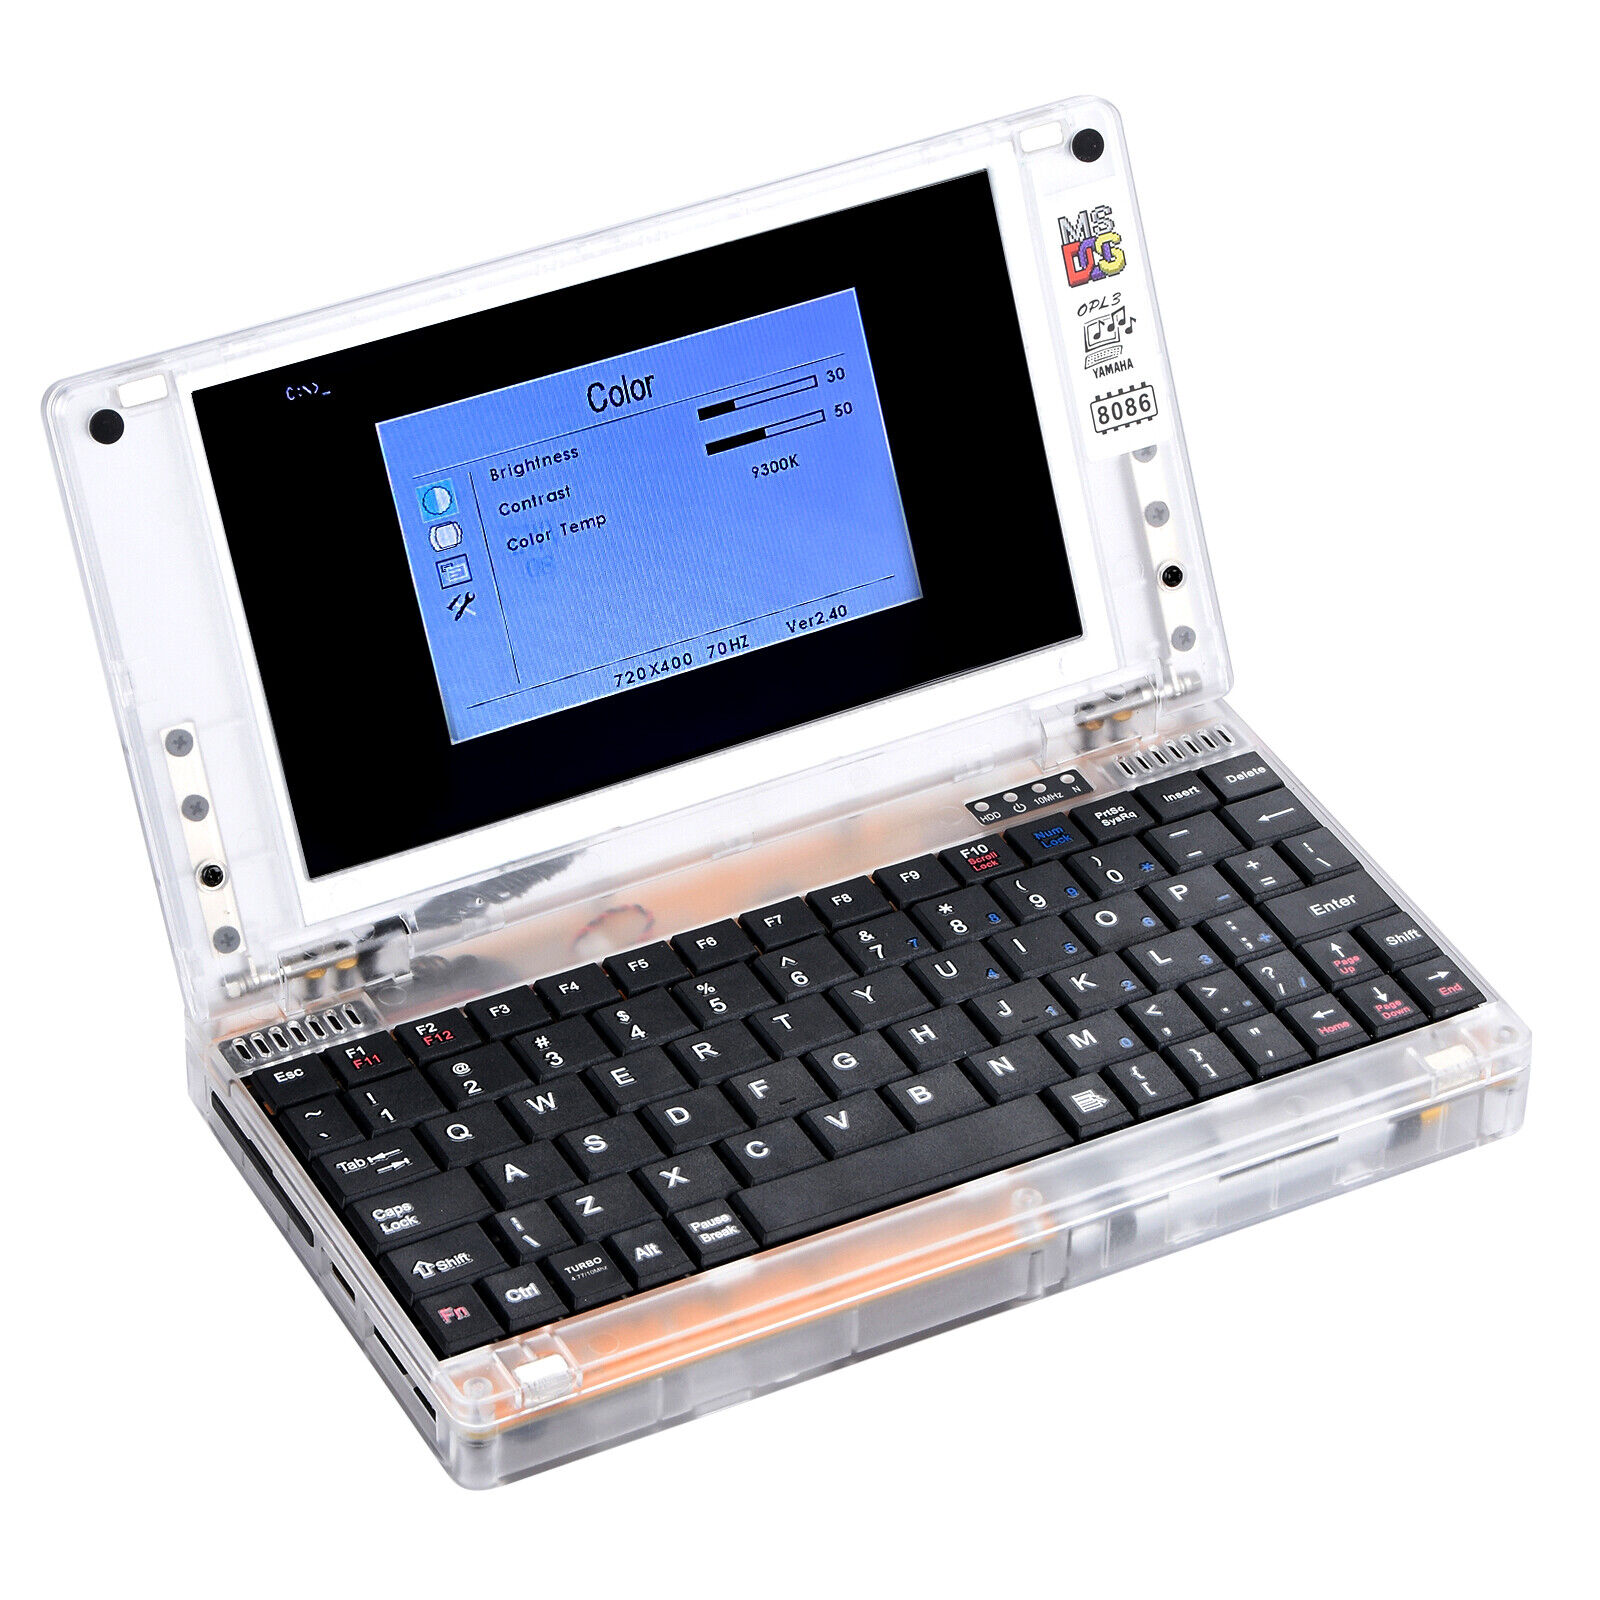 Portable Laptop Win Ver 3.0 640KB RAM Vintage Computer 8086 CPU 4.77MHZ